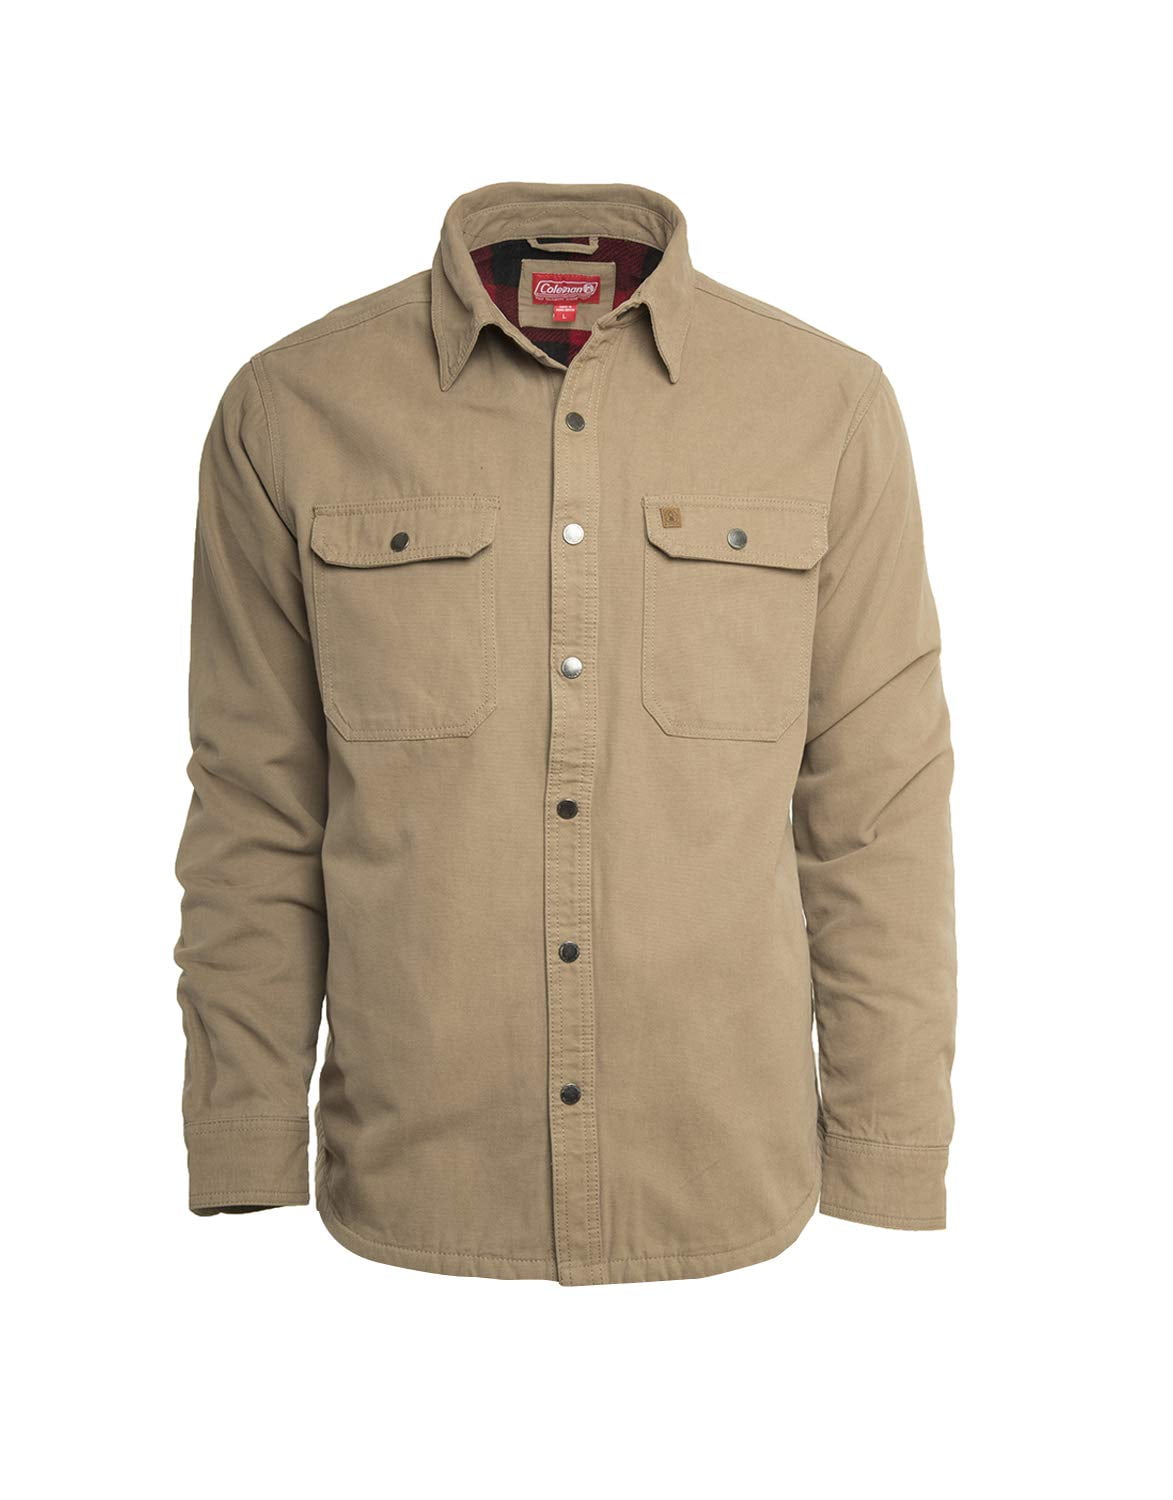 Coleman Fleece Lined Washed Canvas Shirt Jackets For Men (Medium, Driftwood)